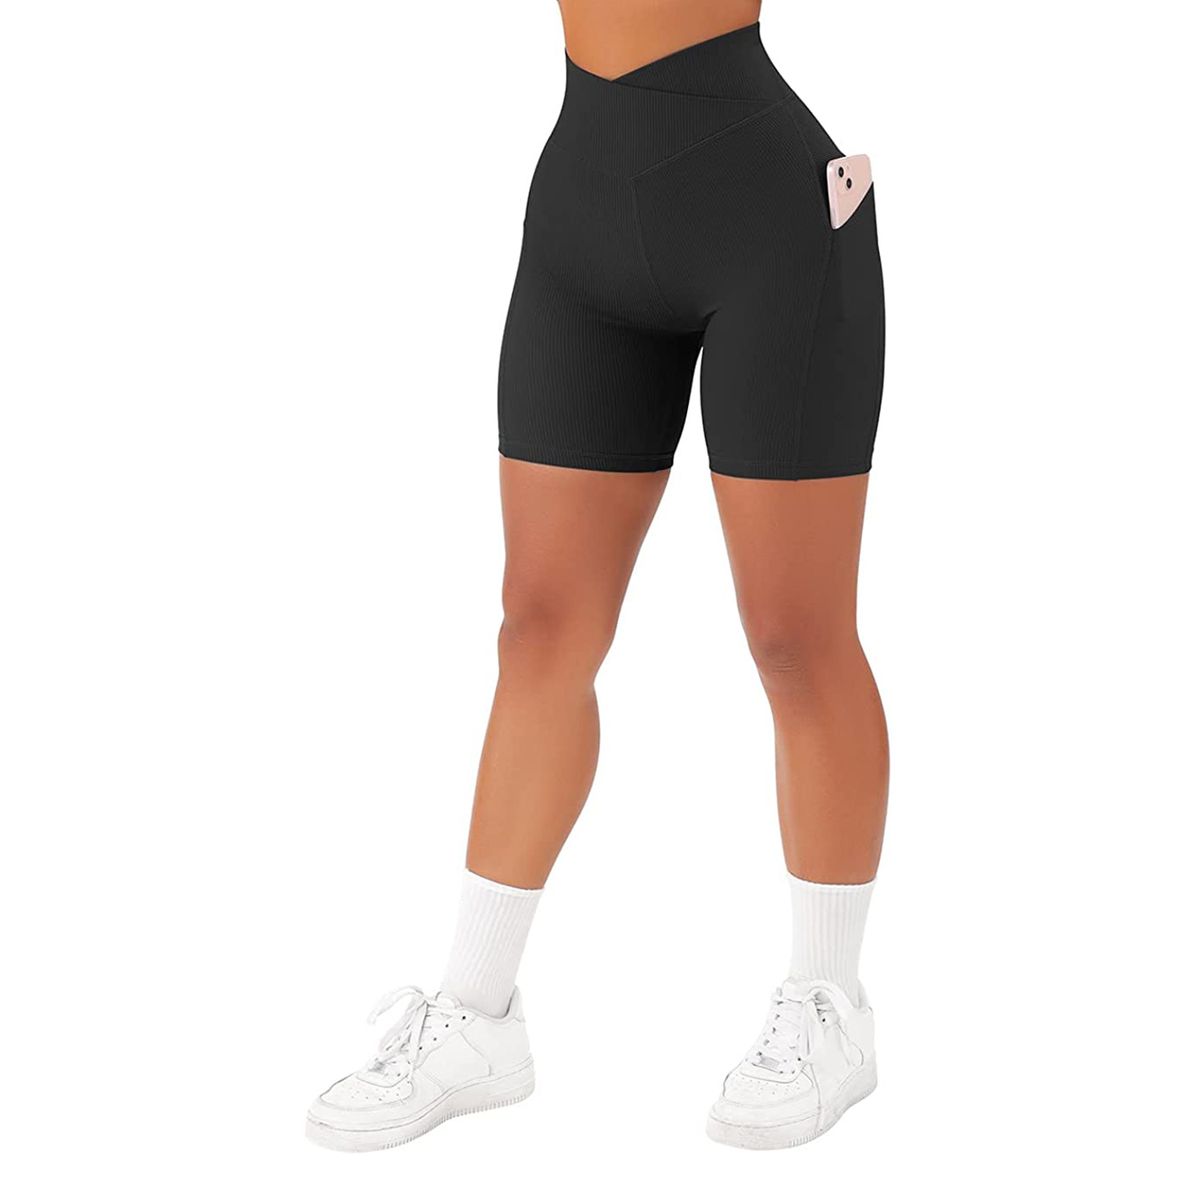 SUUKSESS Women Cross Workout Biker Shorts